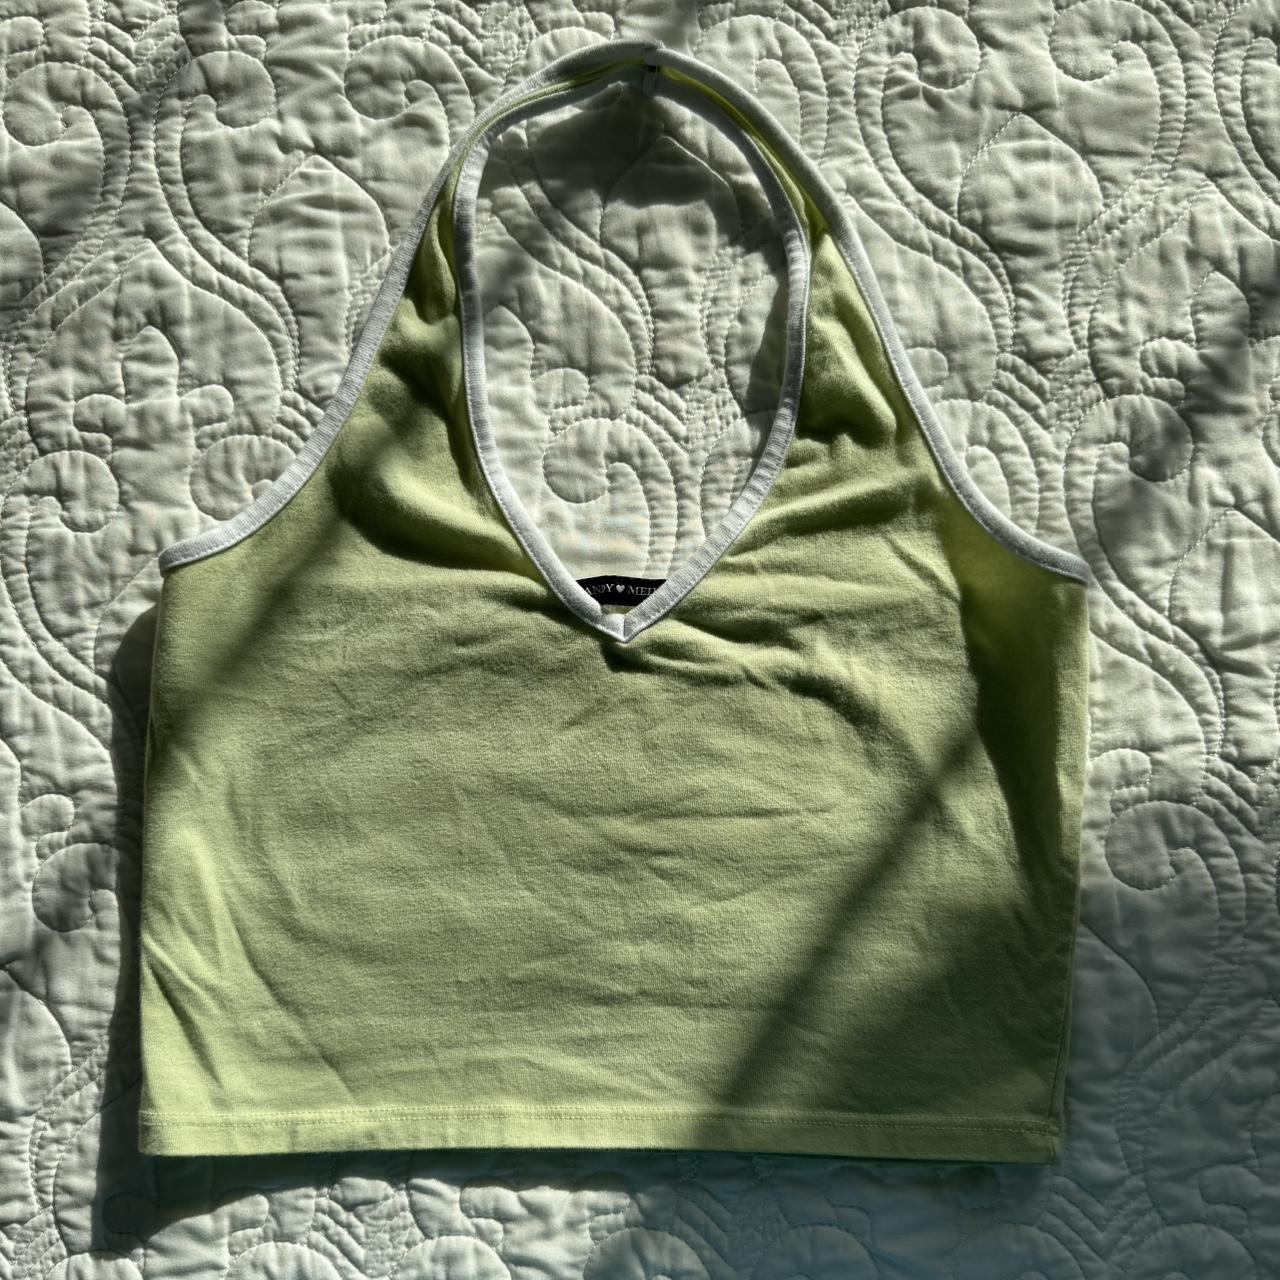 Brandy Melville, one size, green halter top